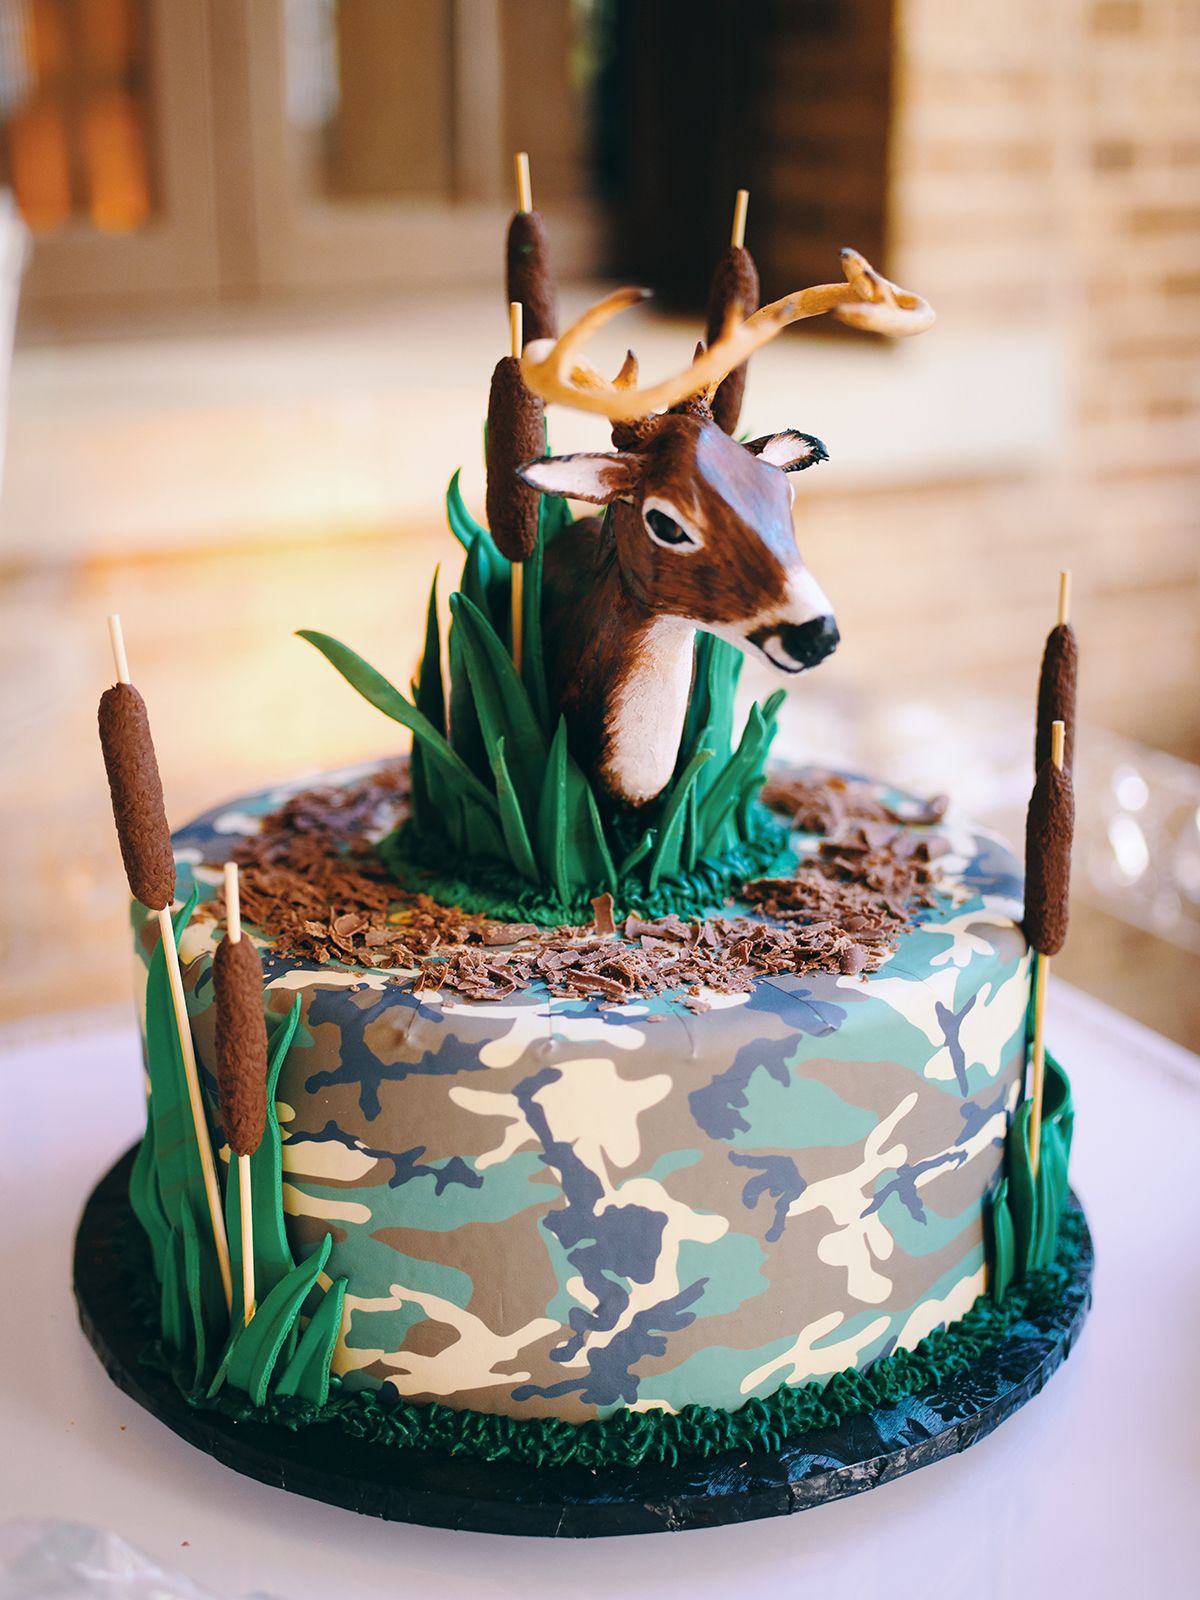 Grooms Cake - Country Deer Hunting Theme